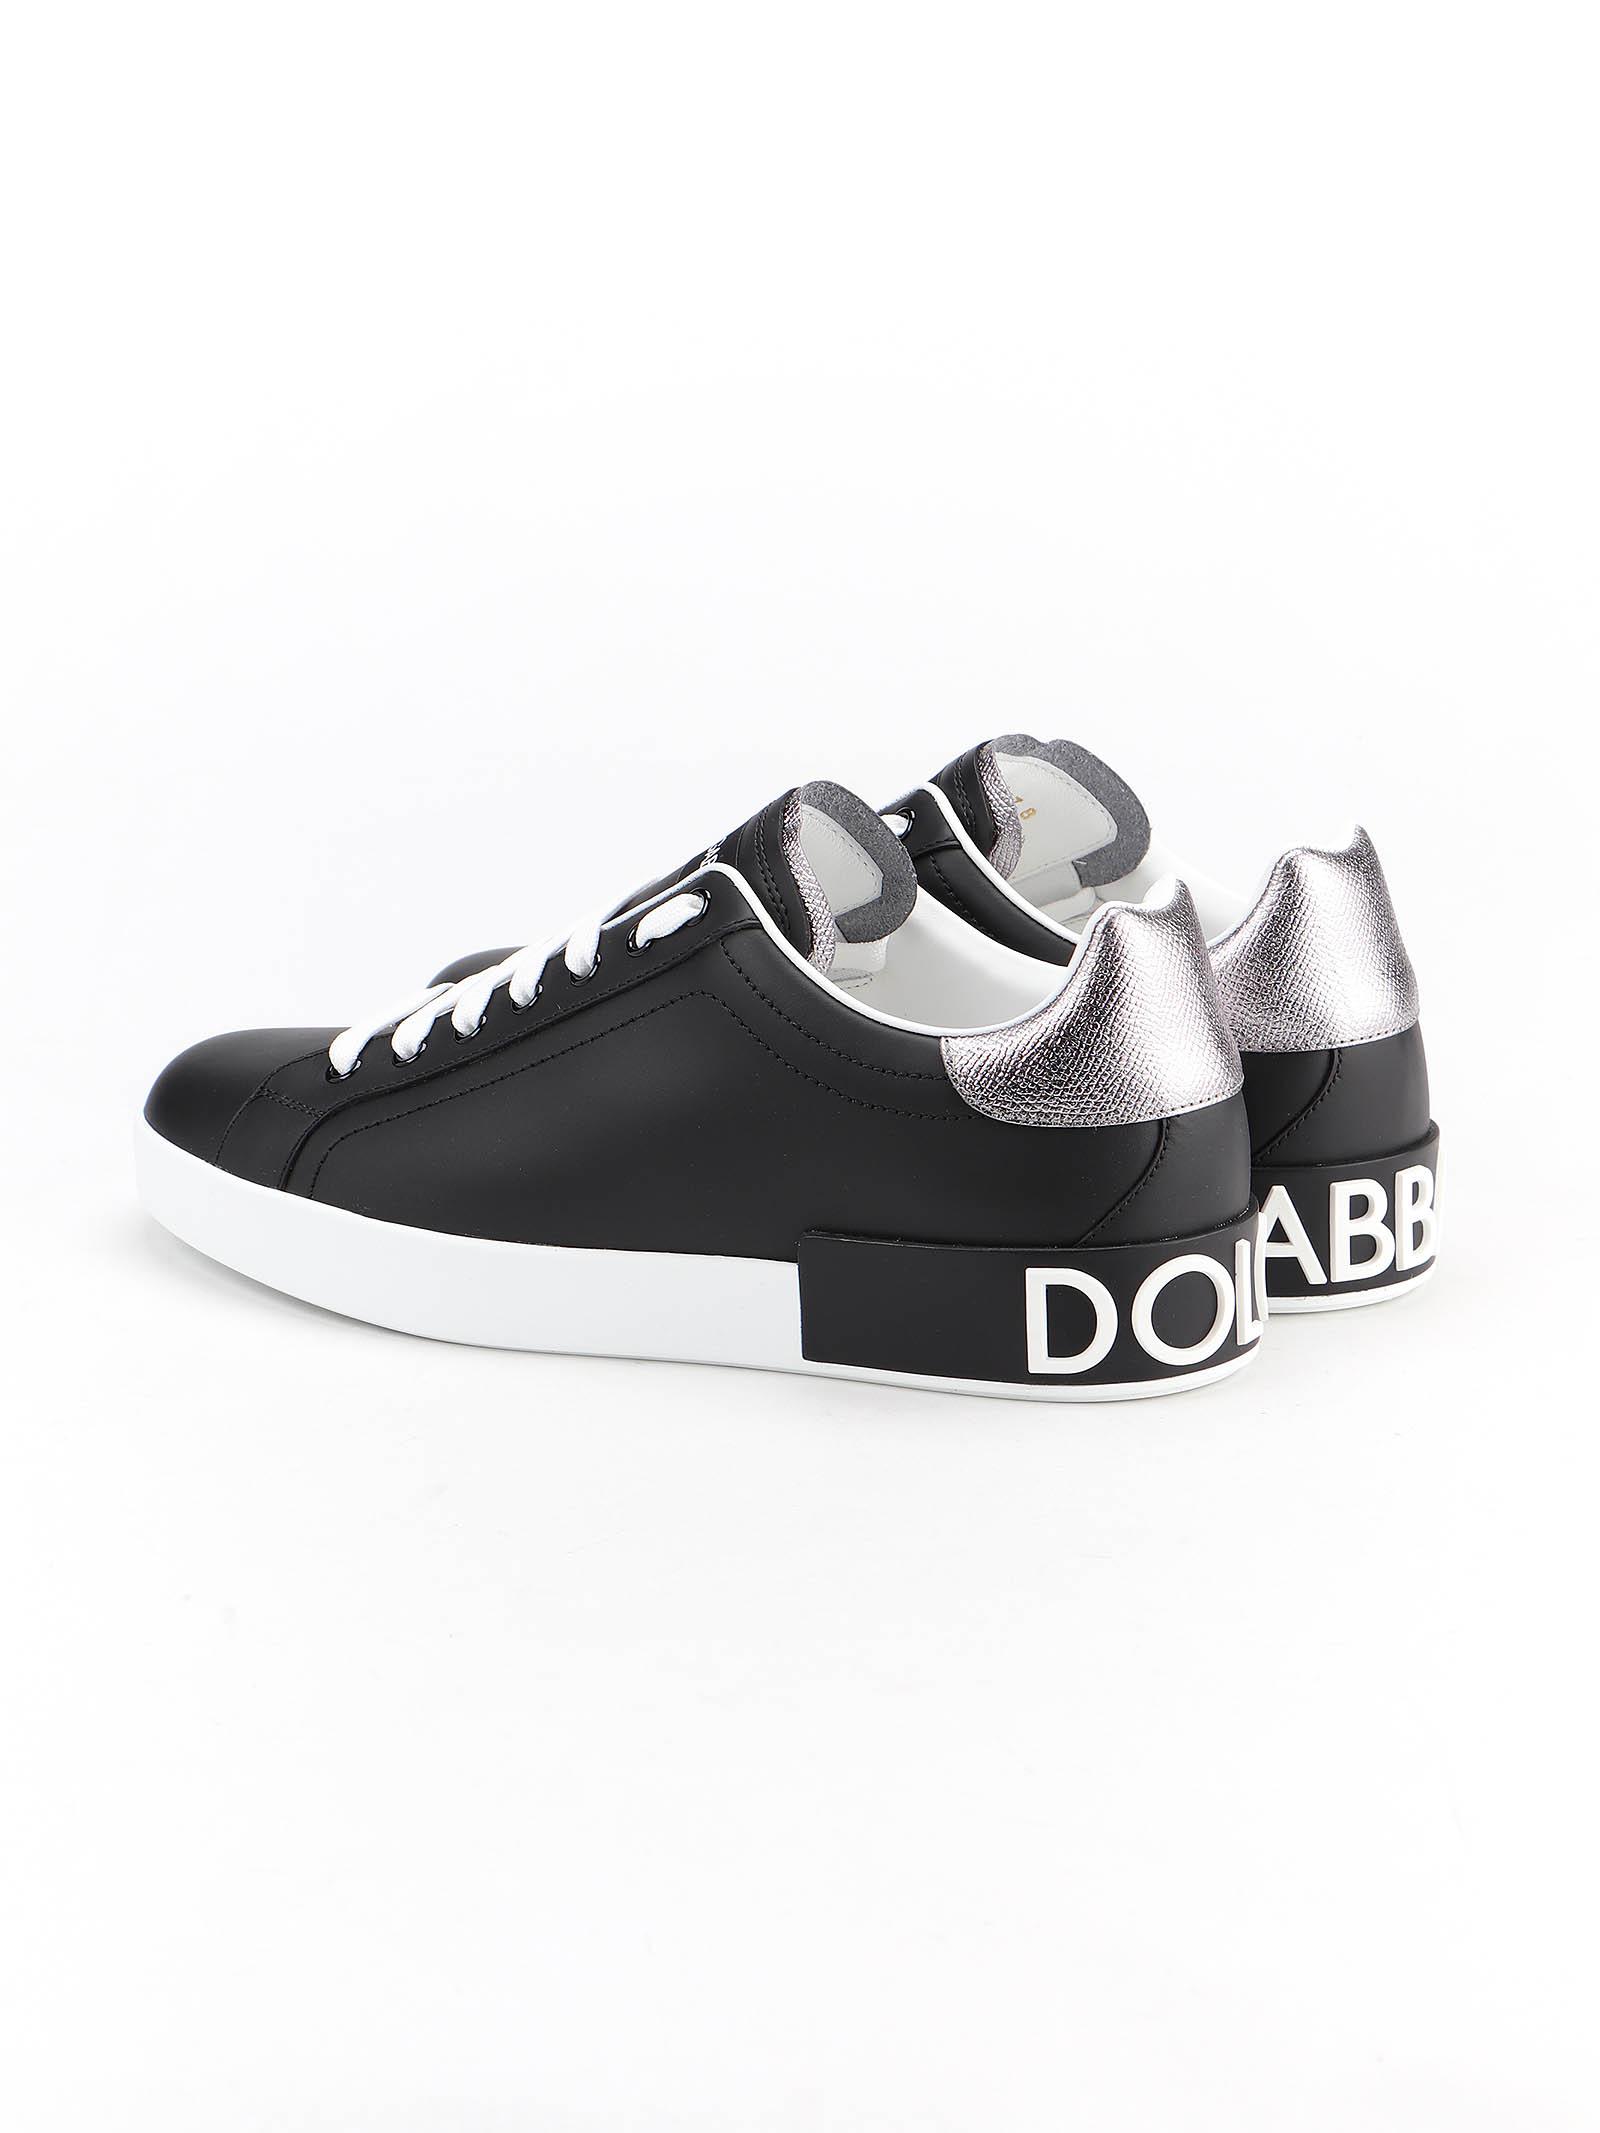 Dolce & Gabbana Leather Portofino Sneaker in Black for Men - Lyst